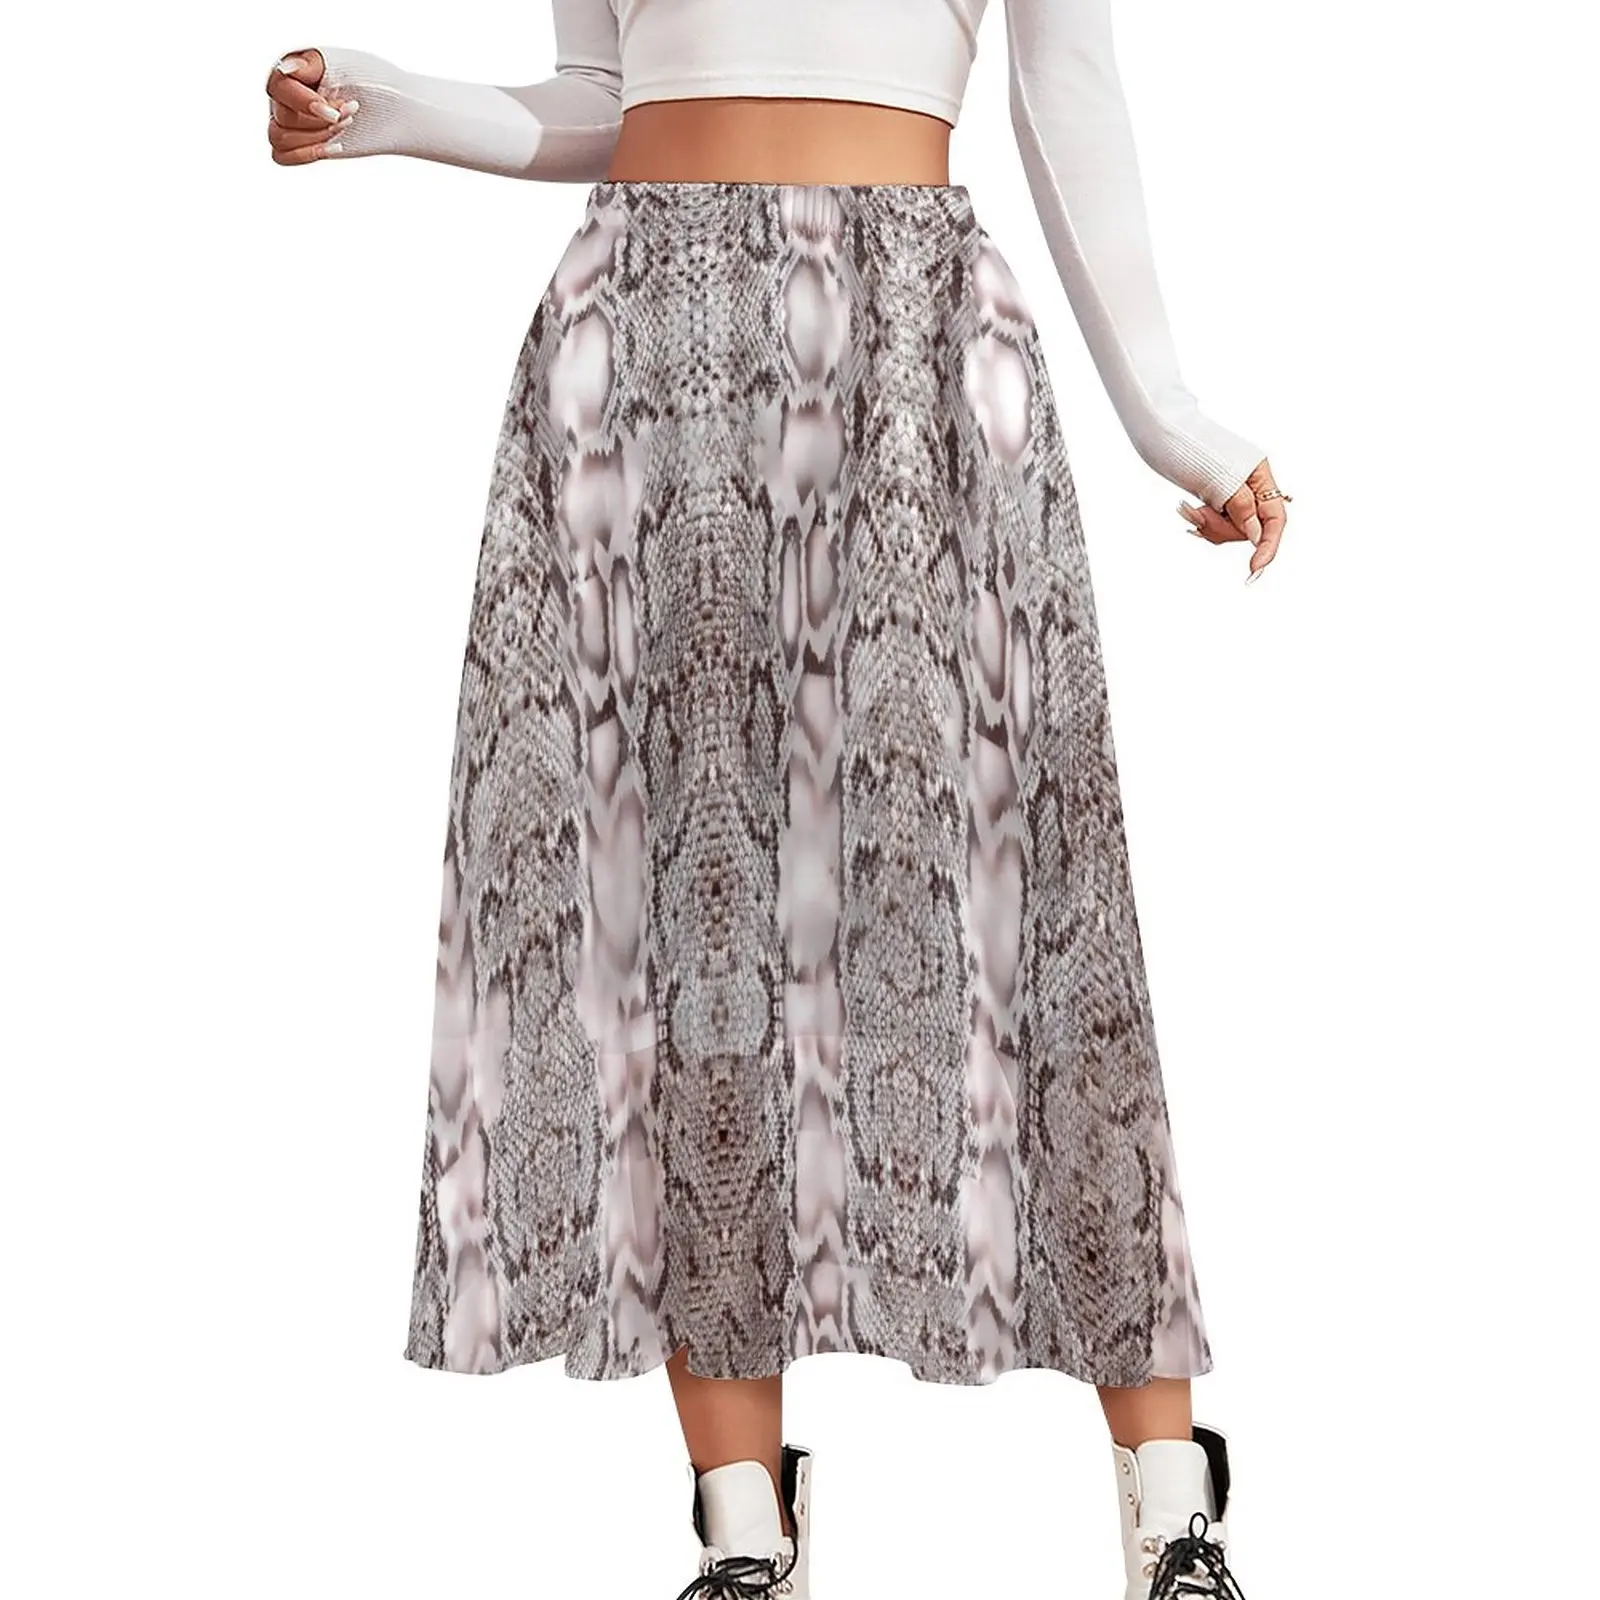 

Snakeskin Print Skirt White And Brown Trendy Long Skirts Summer Aesthetic High Waist Chiffon Graphic Oversized A-line Skirt